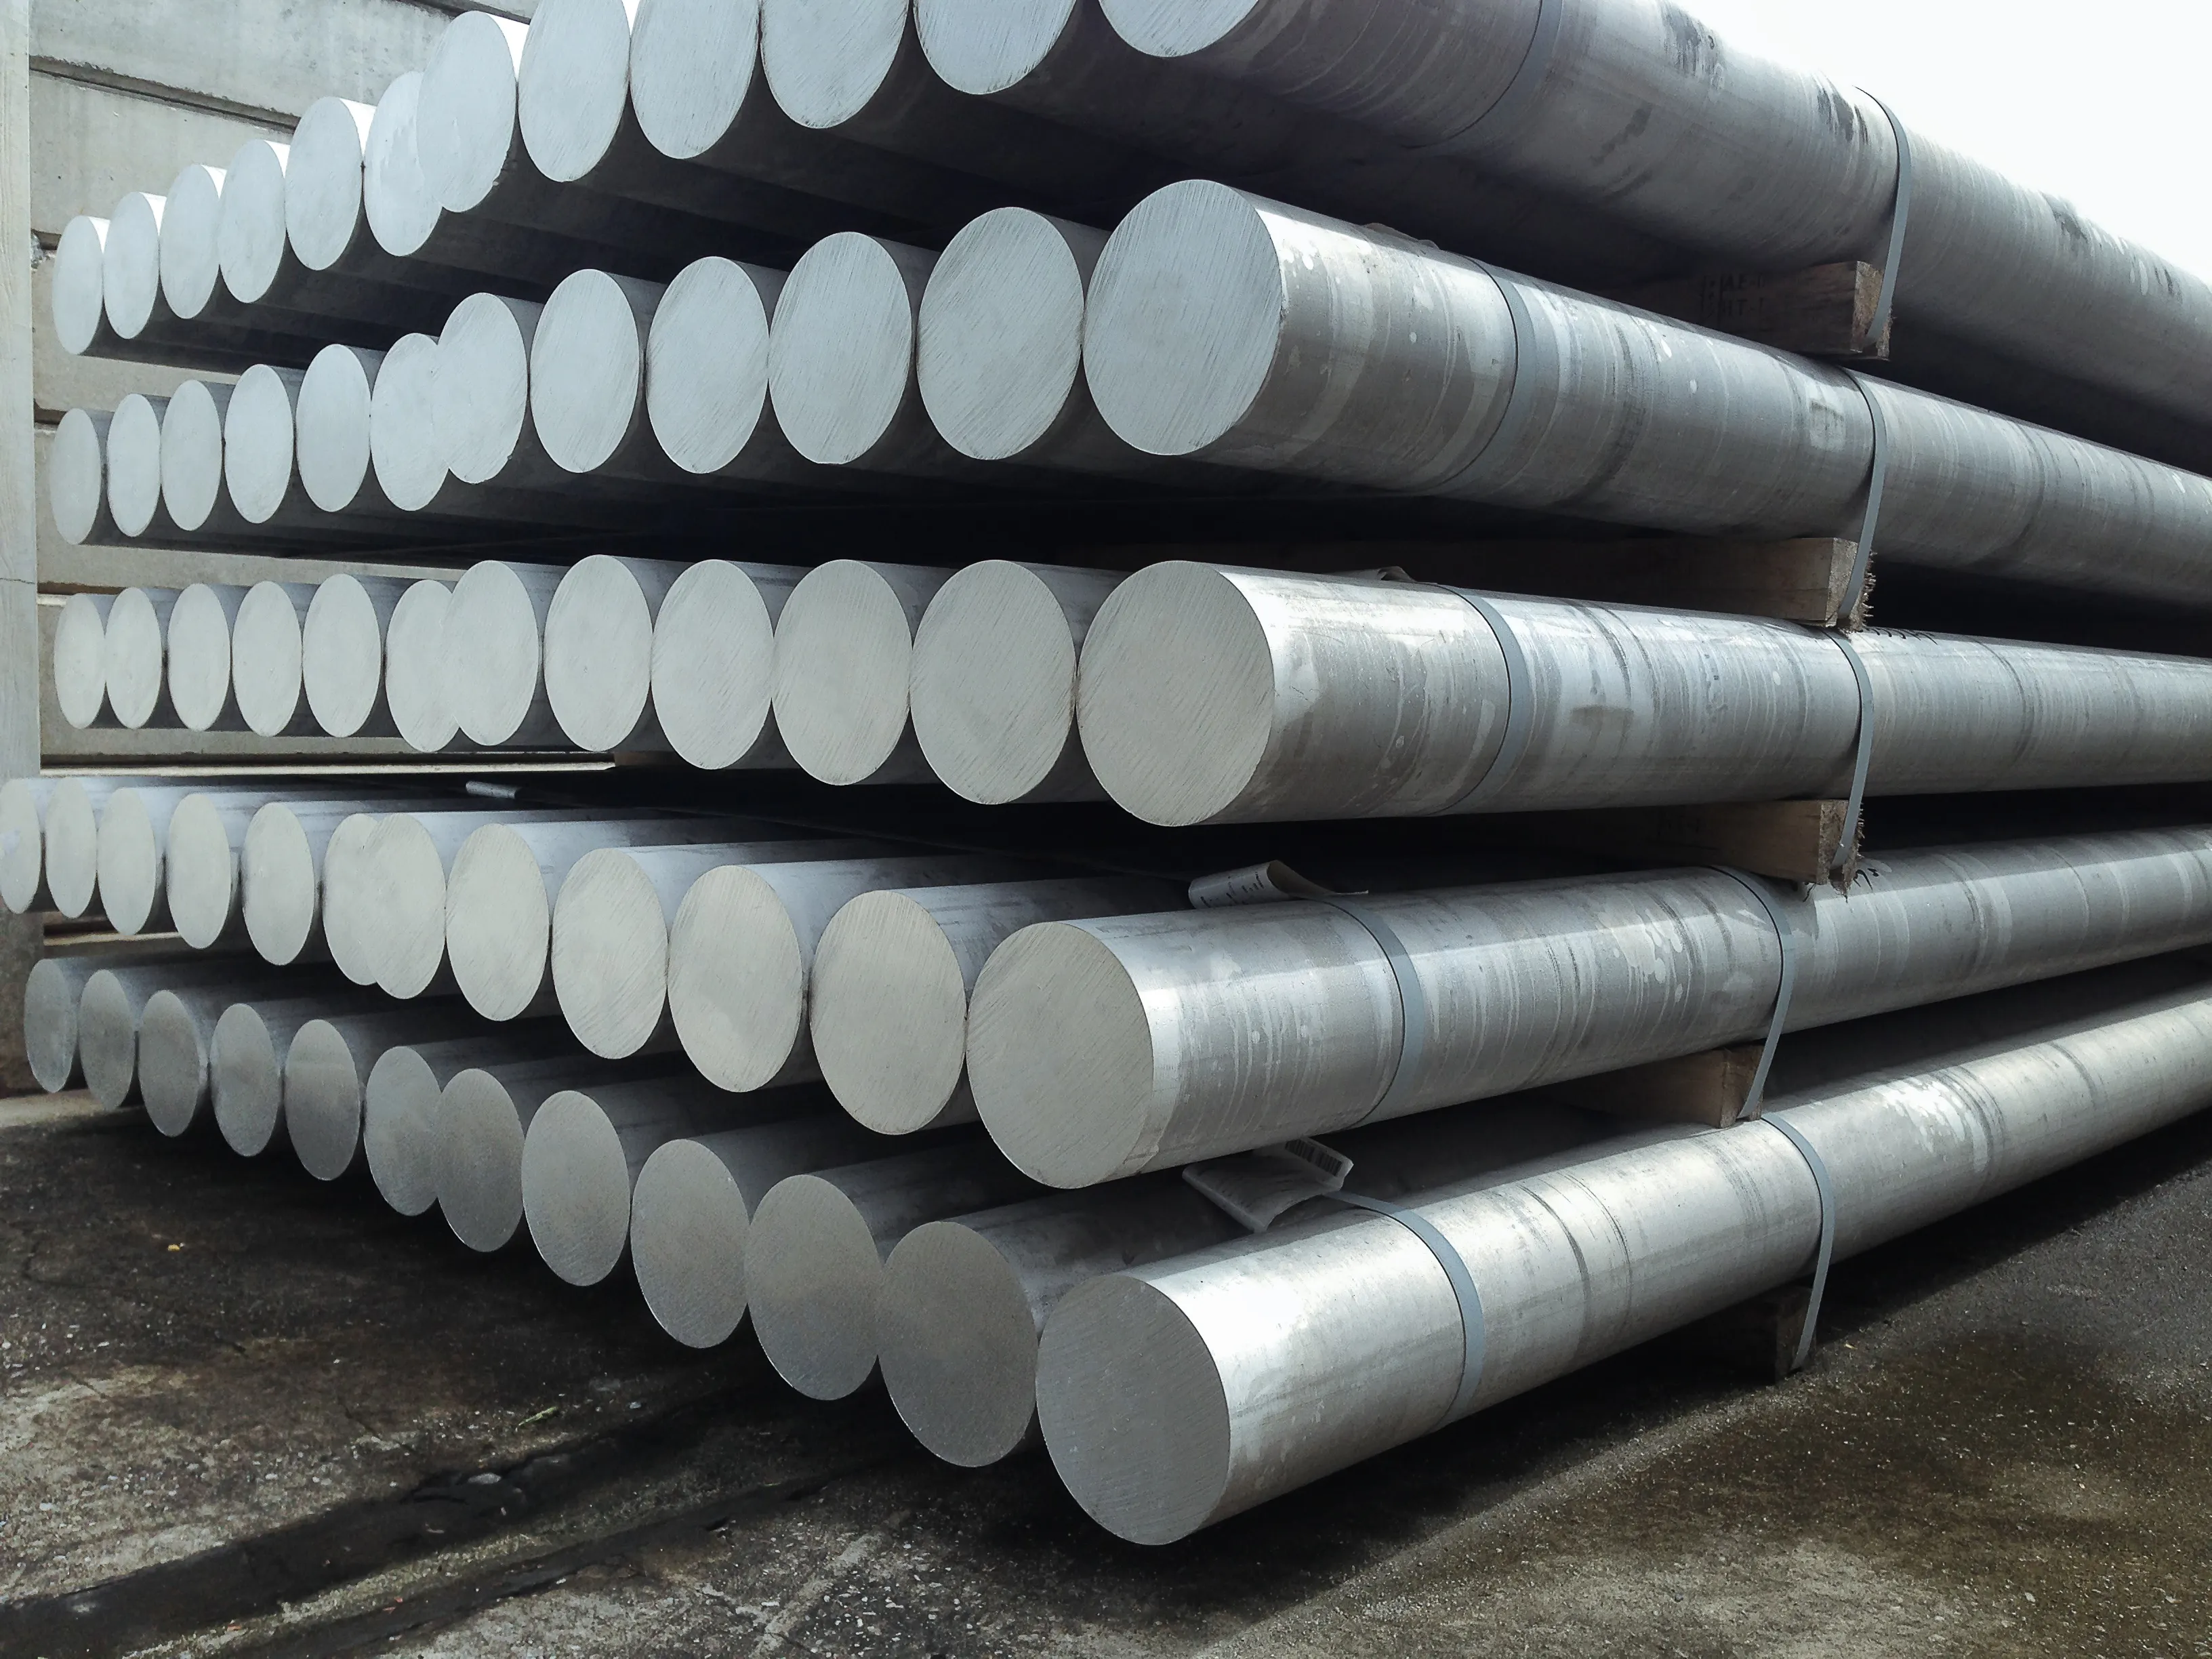 High Carbon Mold Steel Materials Sheets 1.2746 45 NiCrMoV 16-6 Scrap Tube Fabricator Price Vanadium Metal